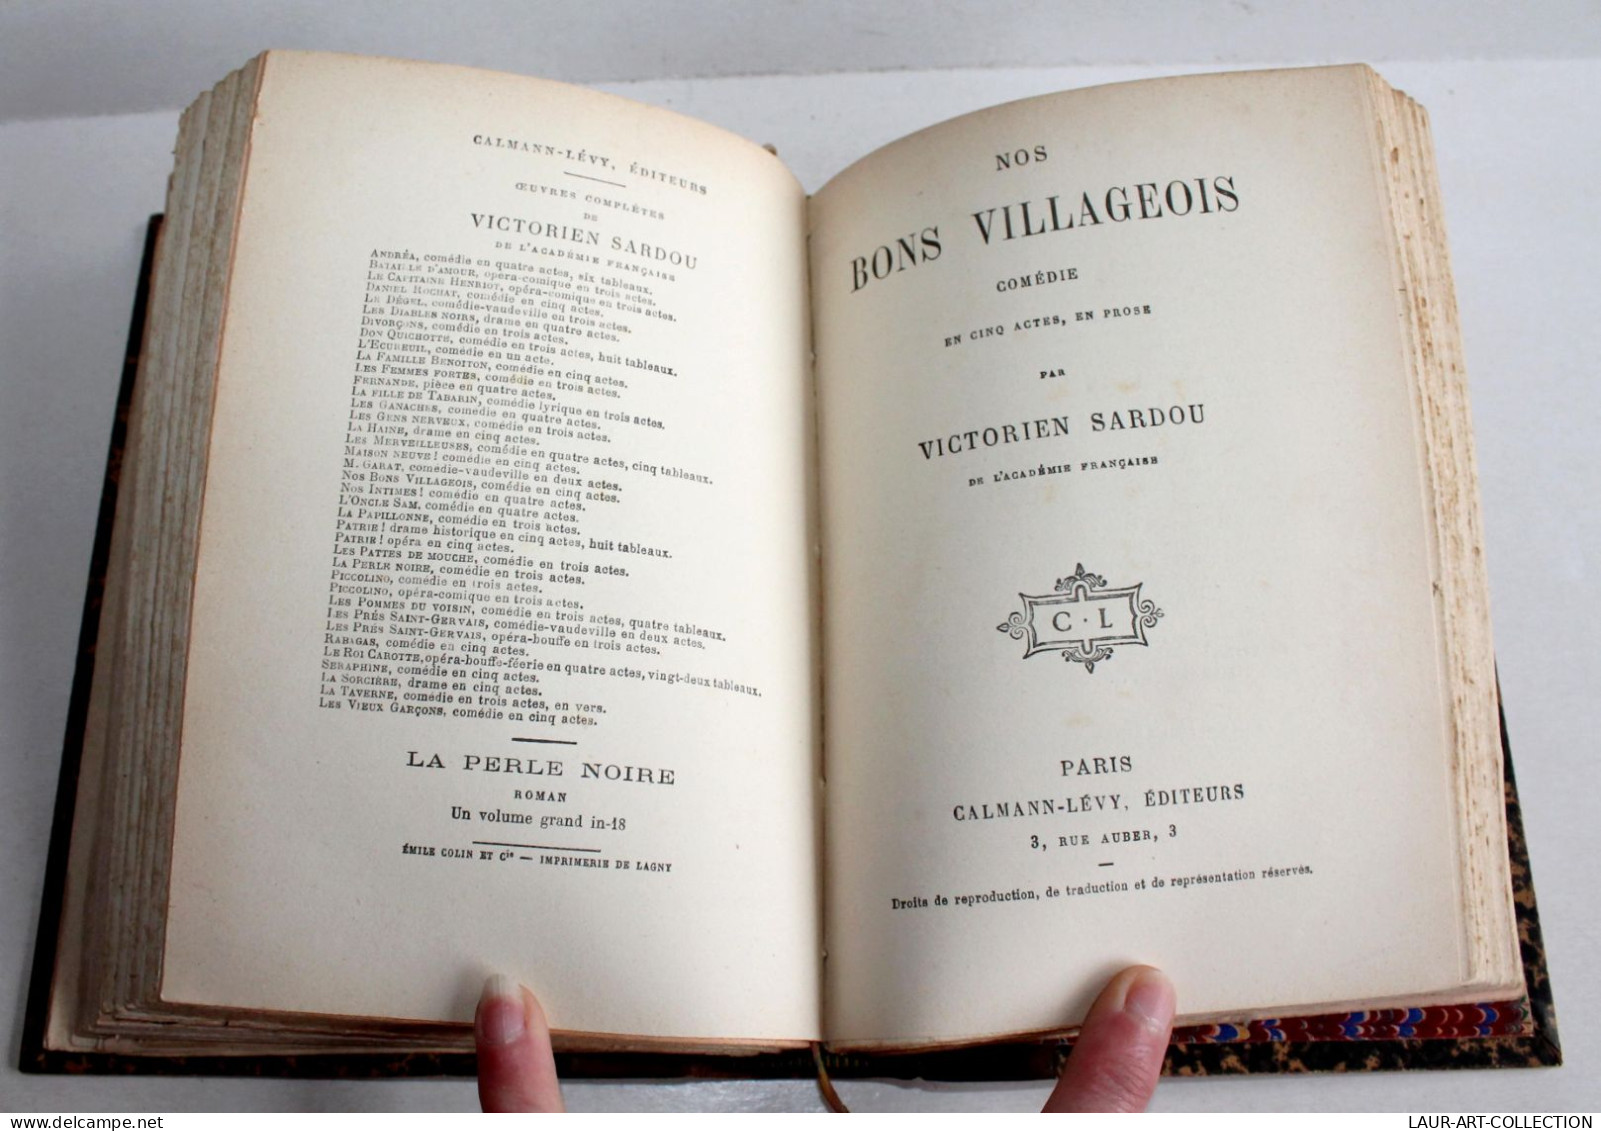 RARE! VICTORIEN SARDOU De CLARETIE + NOS BONS VILLAGEOIS COMEDIE 1883 THEATRE / ANCIEN LIVRE XIXe SIECLE (2603.42) - Französische Autoren